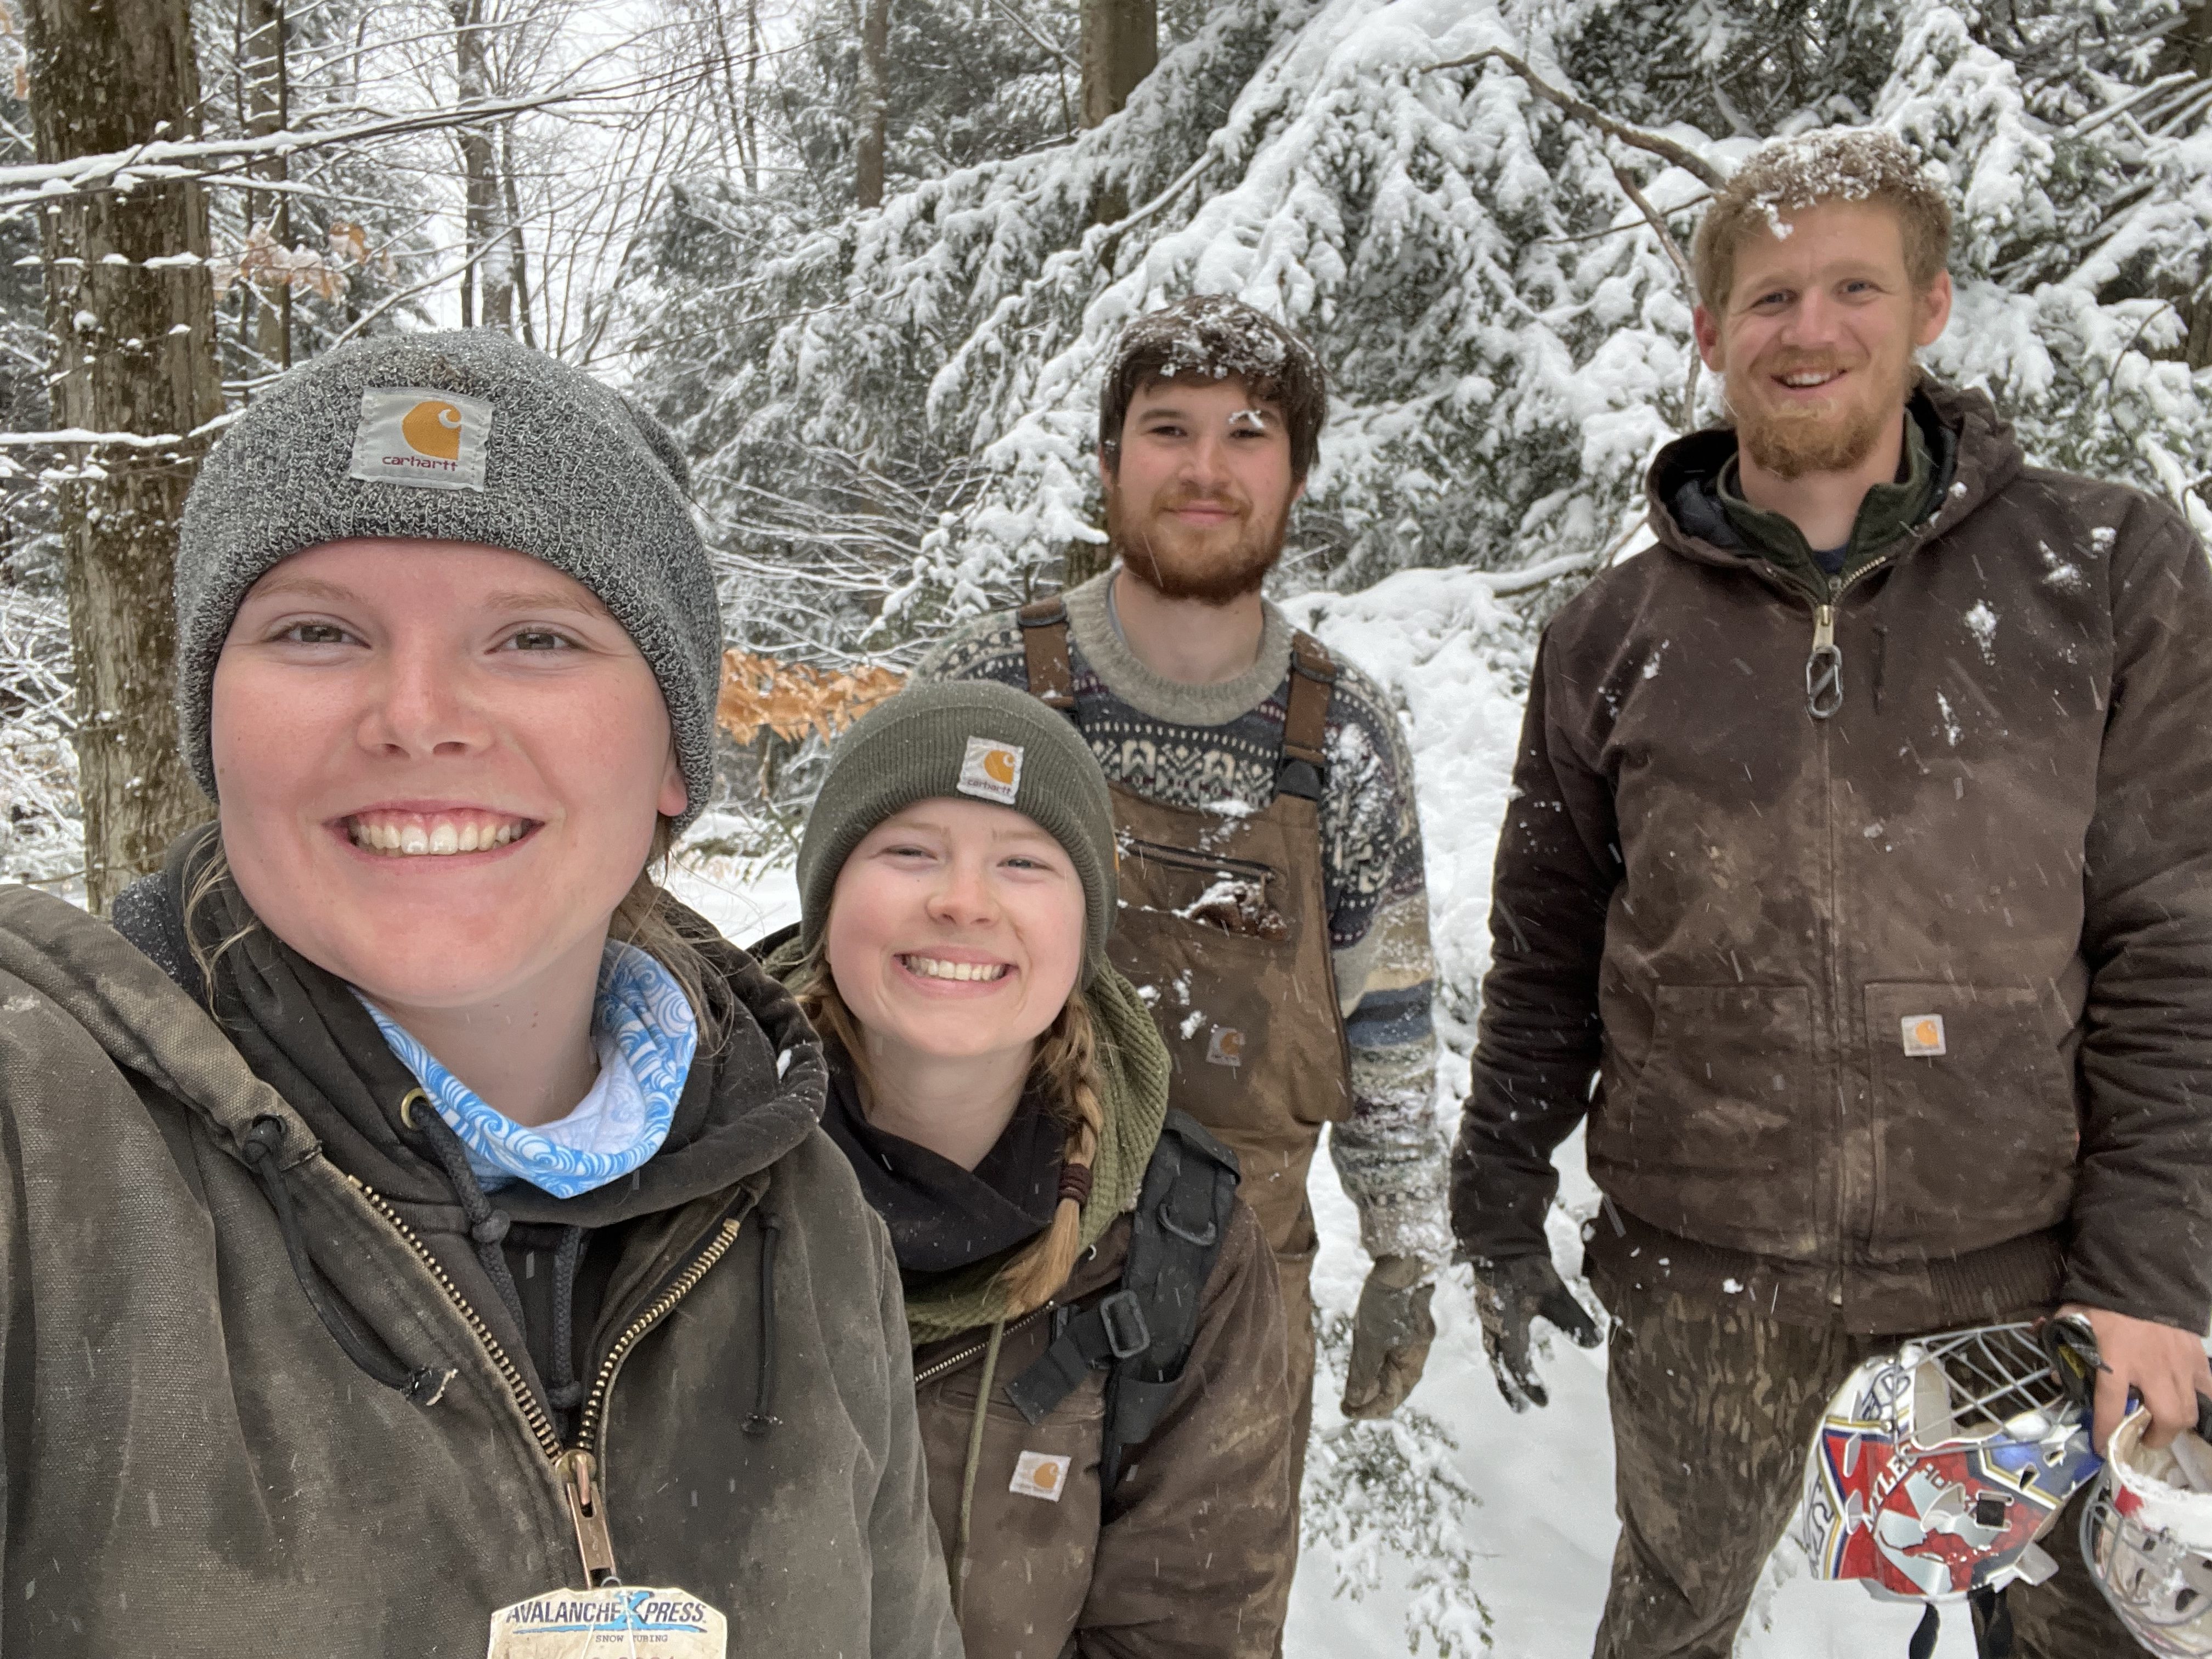 Crew selfie in the snow